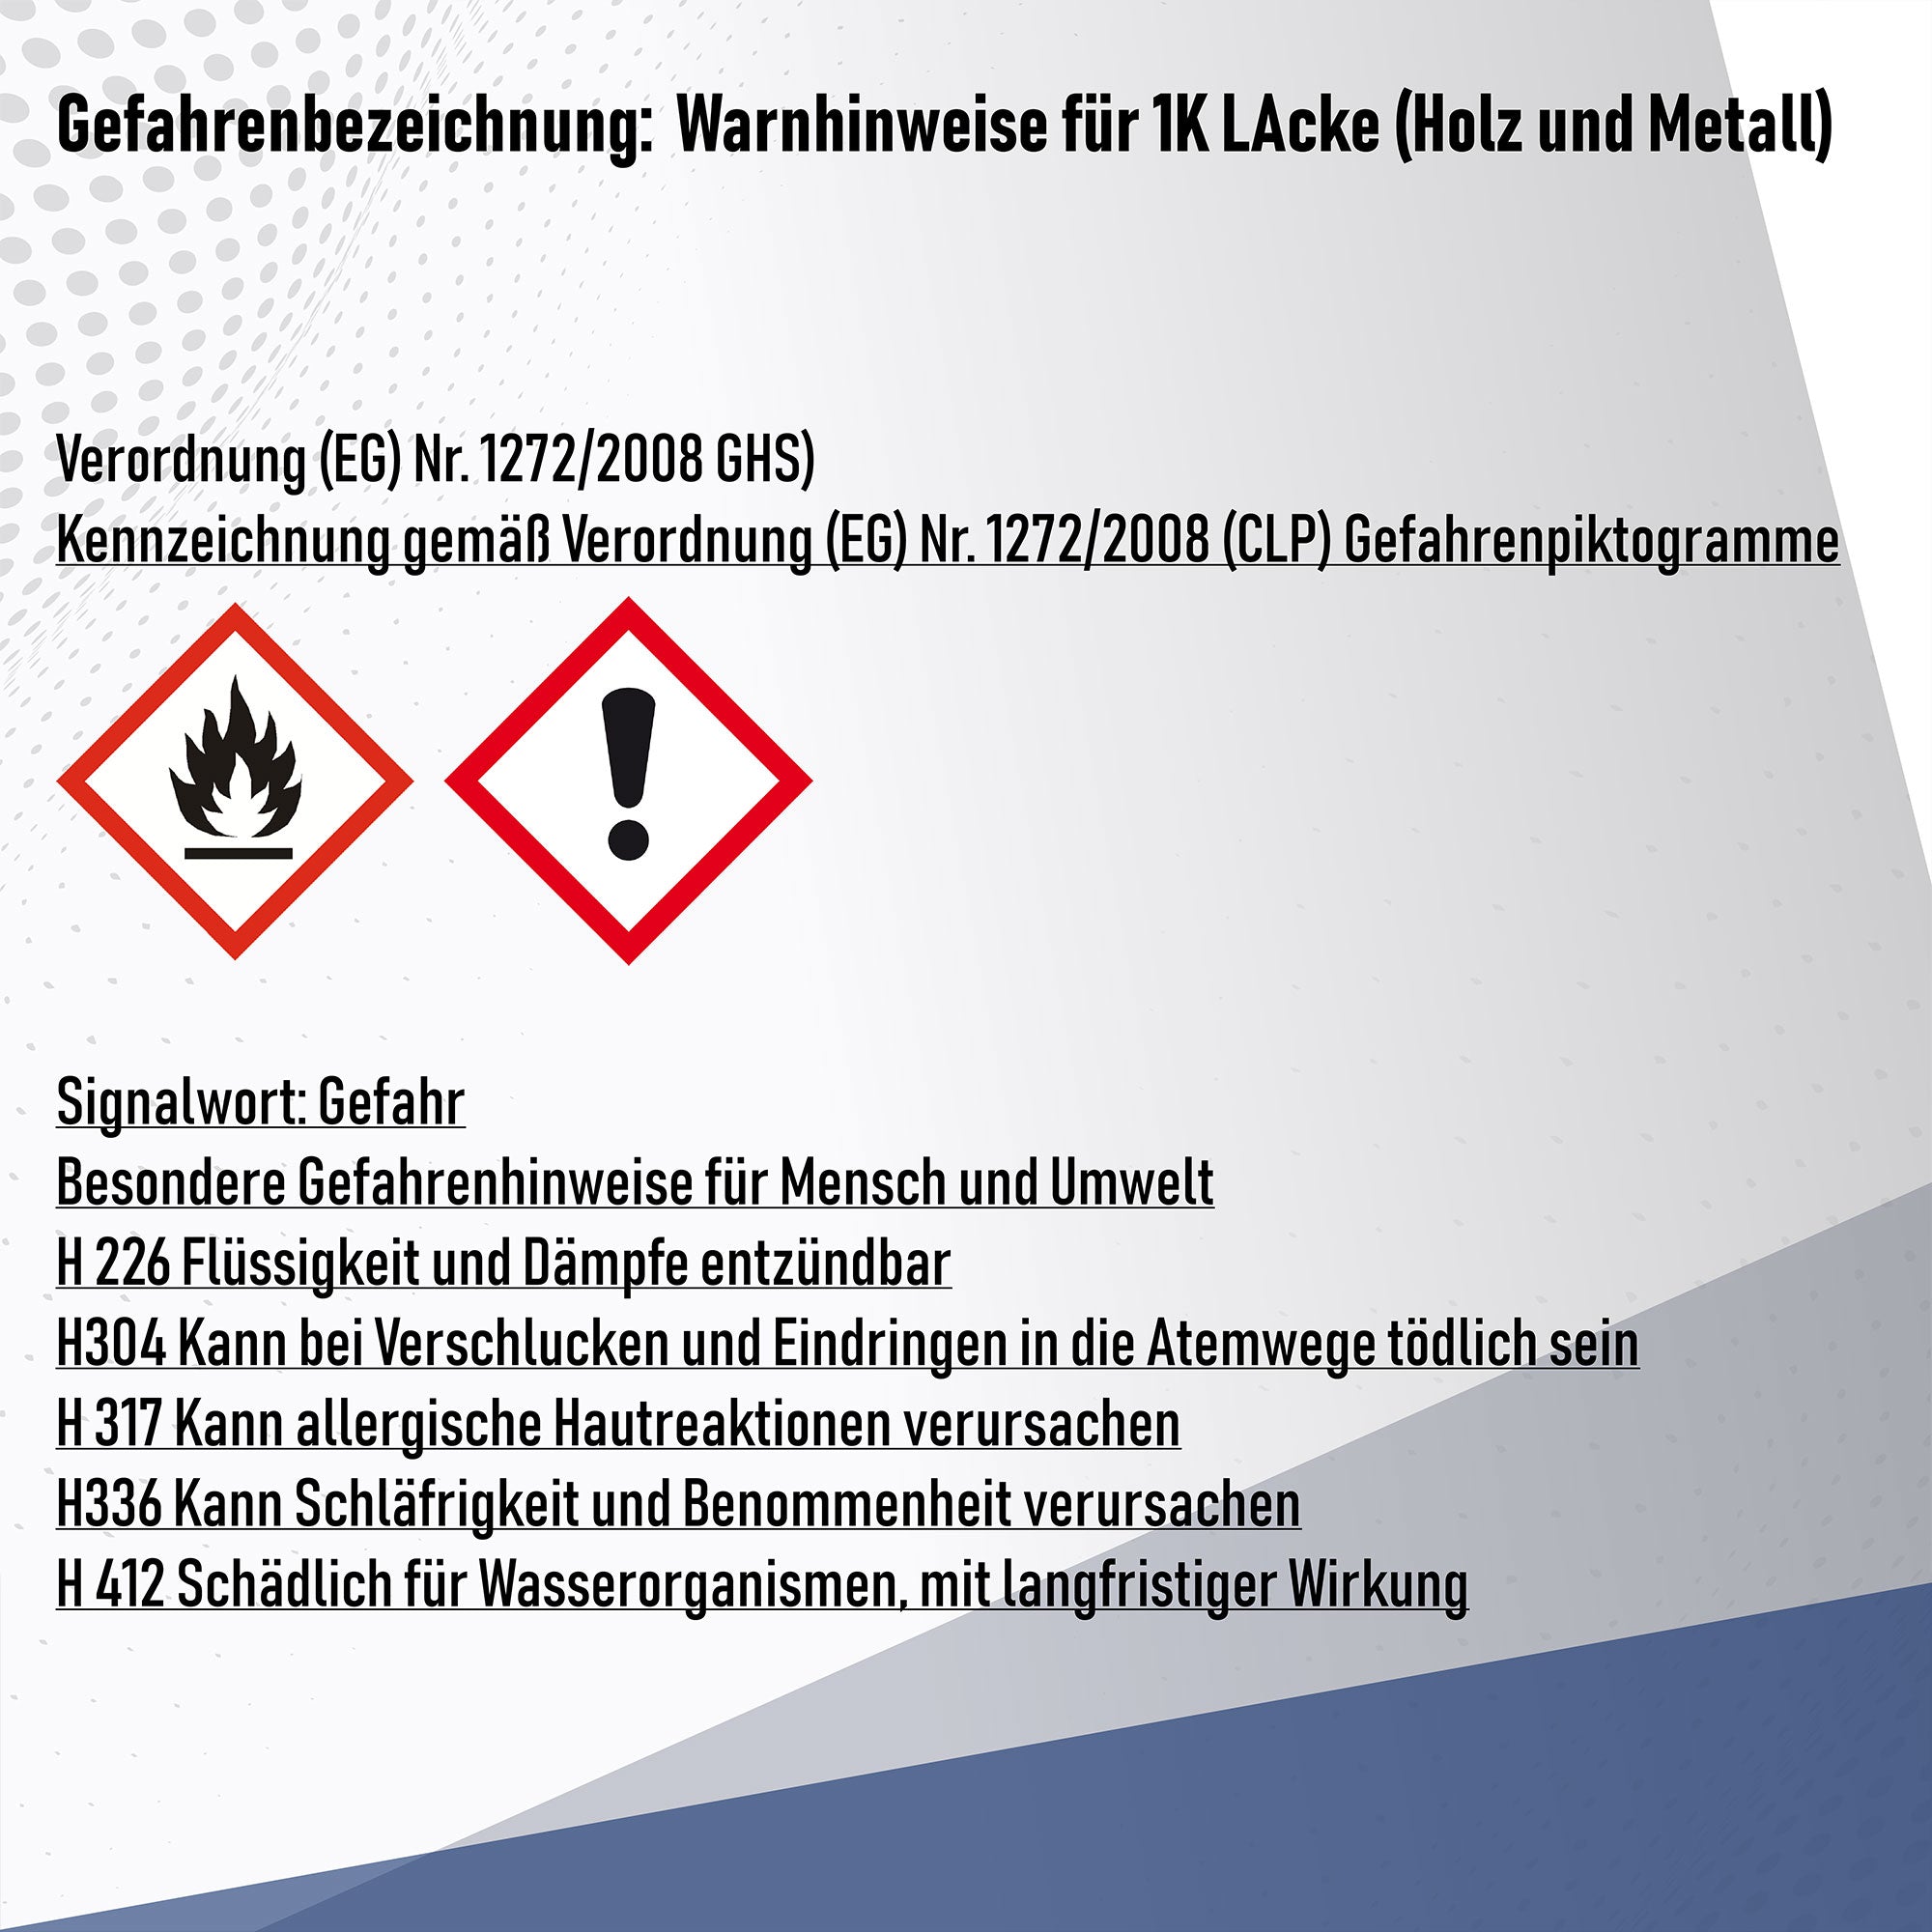 Hamburger Lack-Profi Buntlack Chromoxidgrün RAL 6020 - Robuster Kunstharzlack